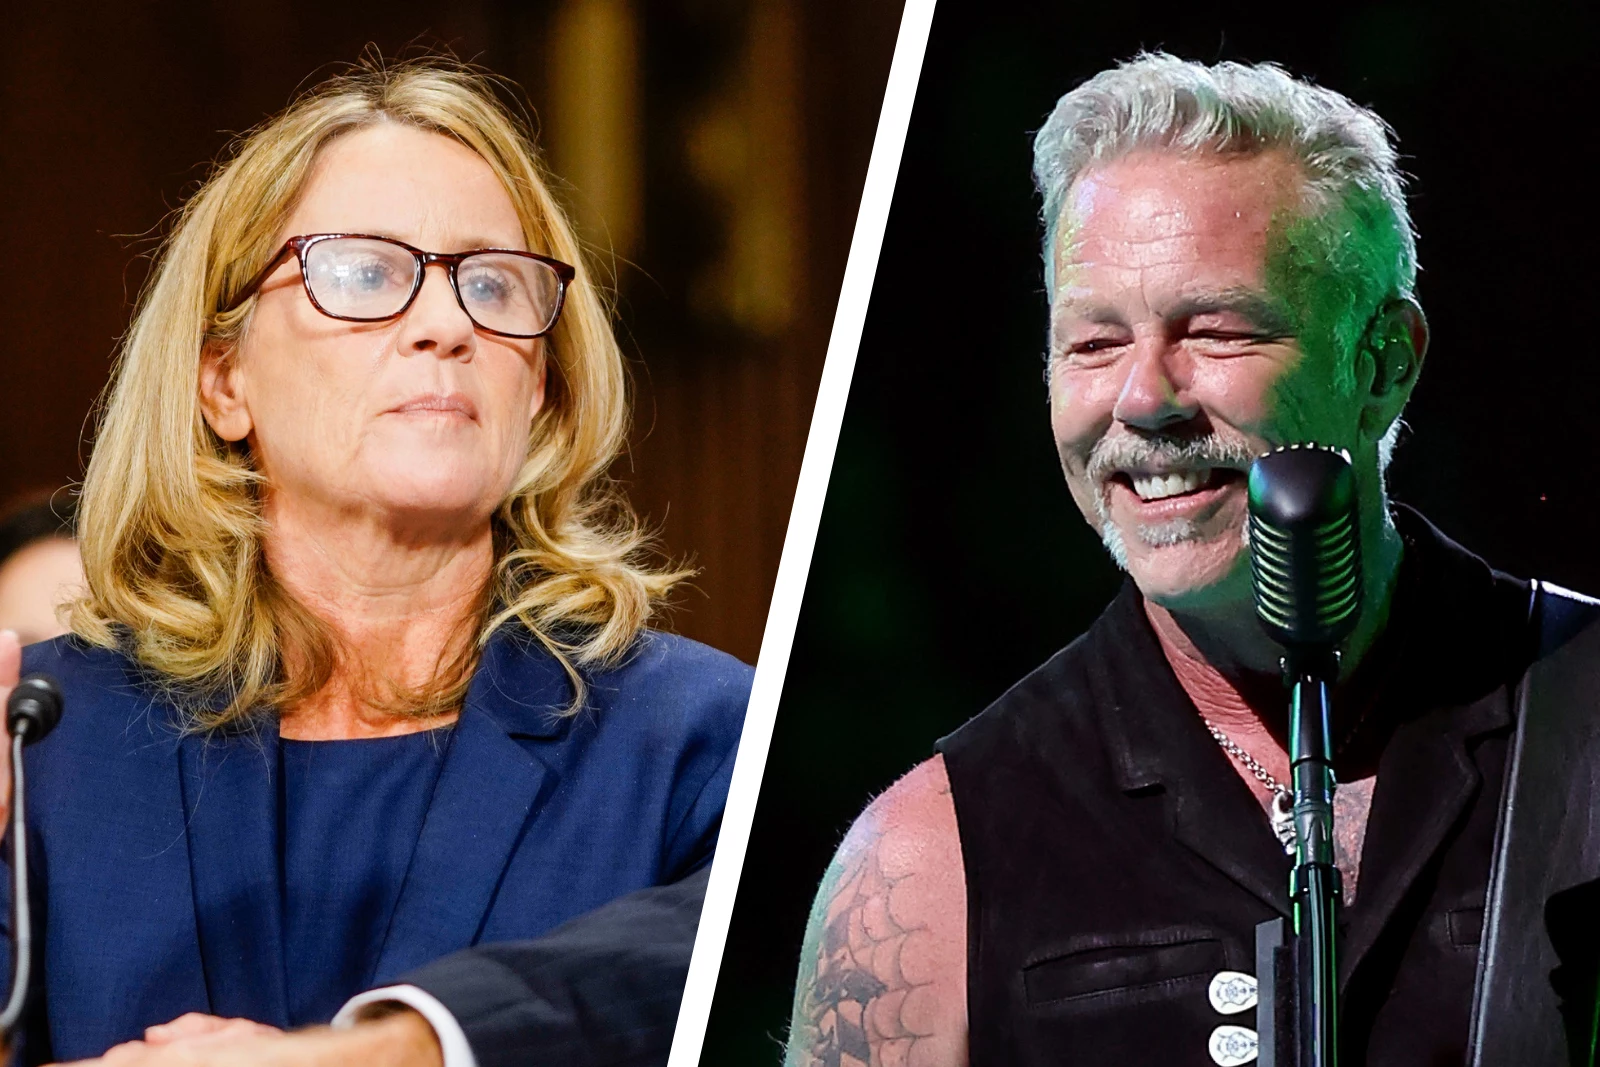 Christine Blasey Ford Shares Love of Metallica in New Memoir